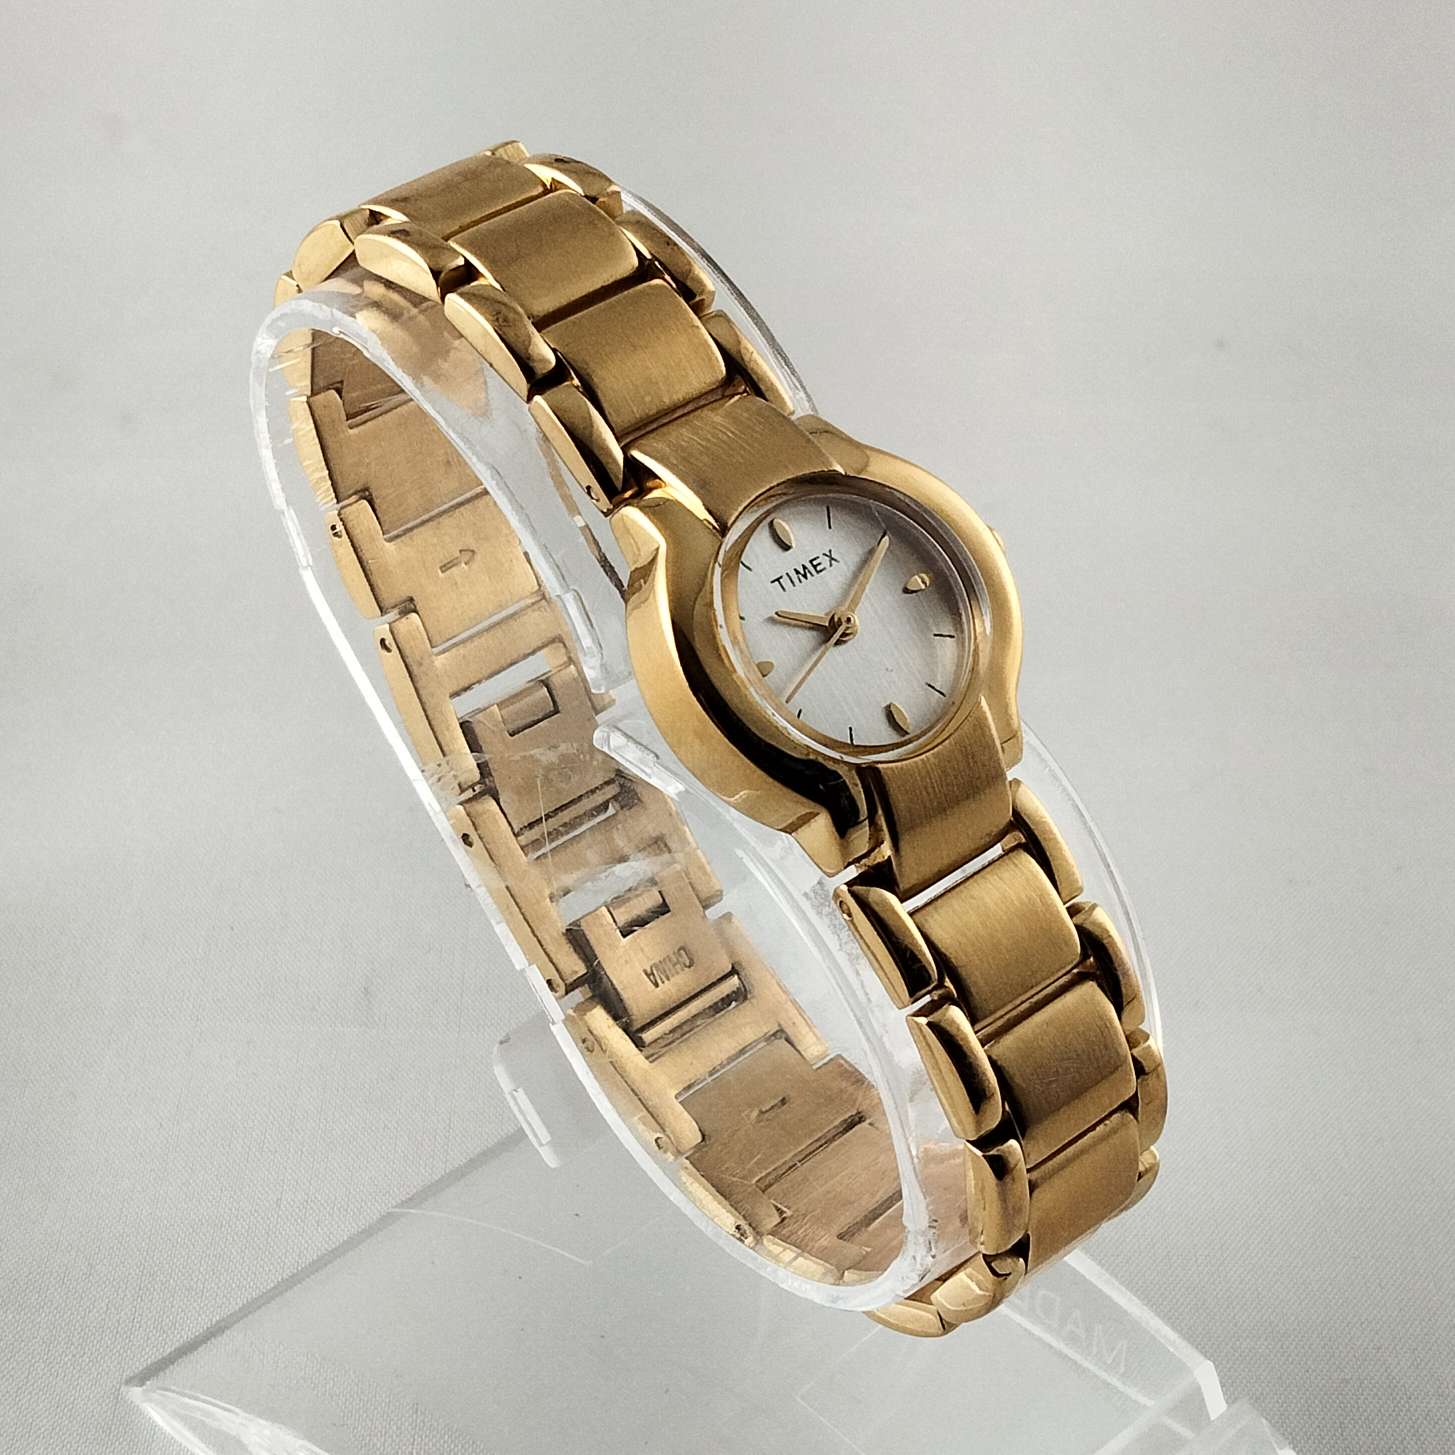 Timex Unisex Gold Tone Watch, Chunky Bracelet Strap